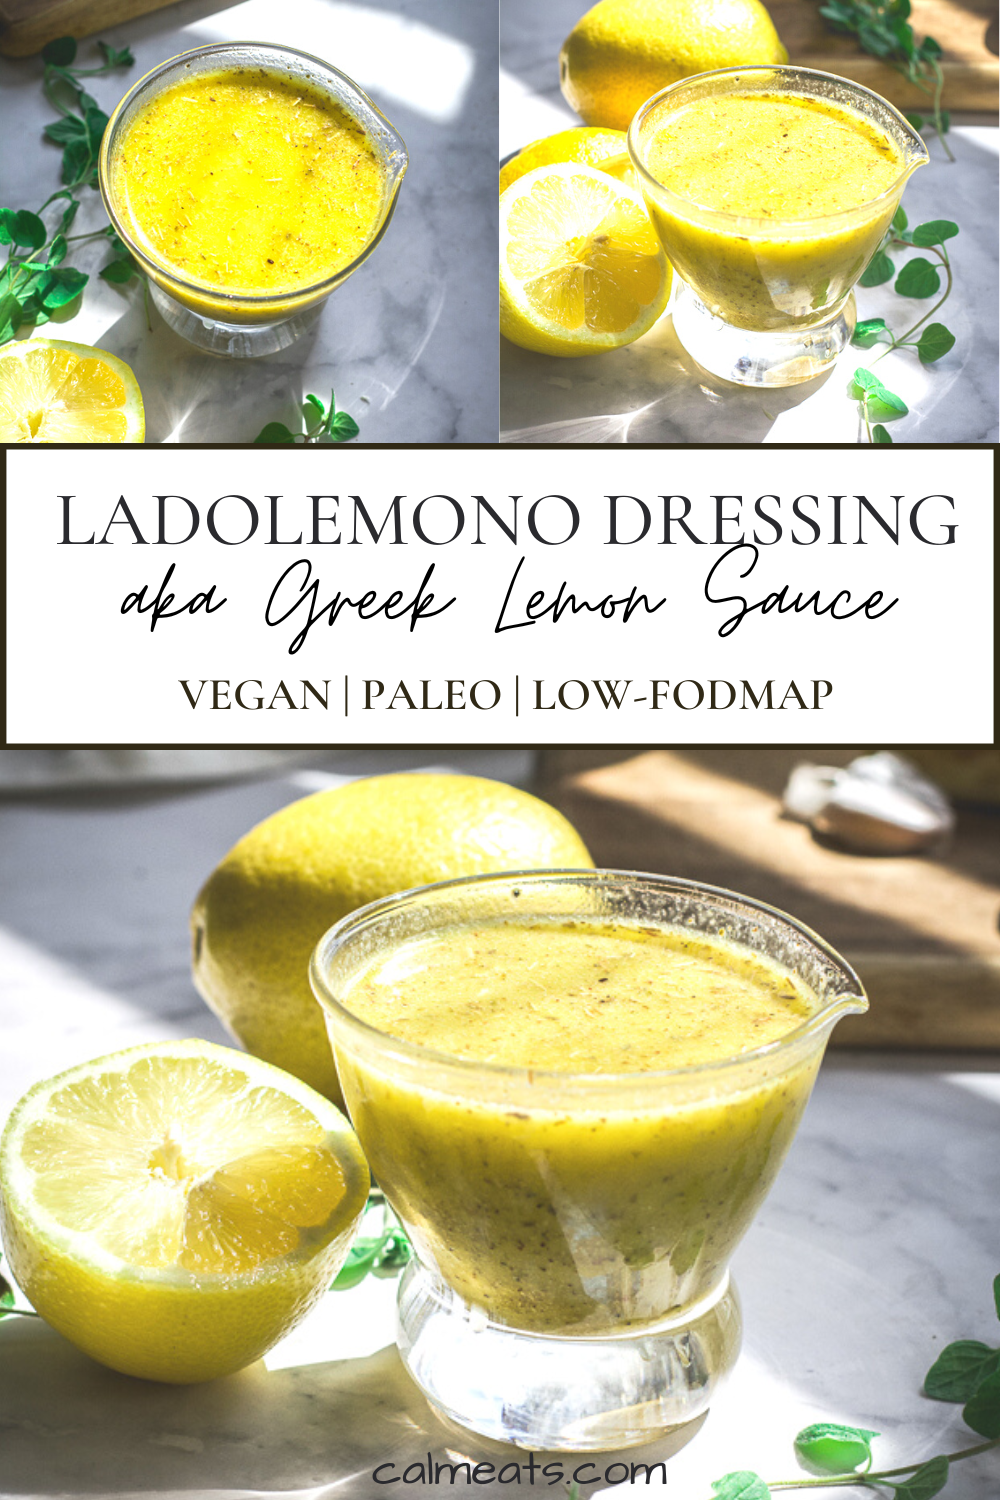 Simple Ladolemono Dressing - Calm Eats